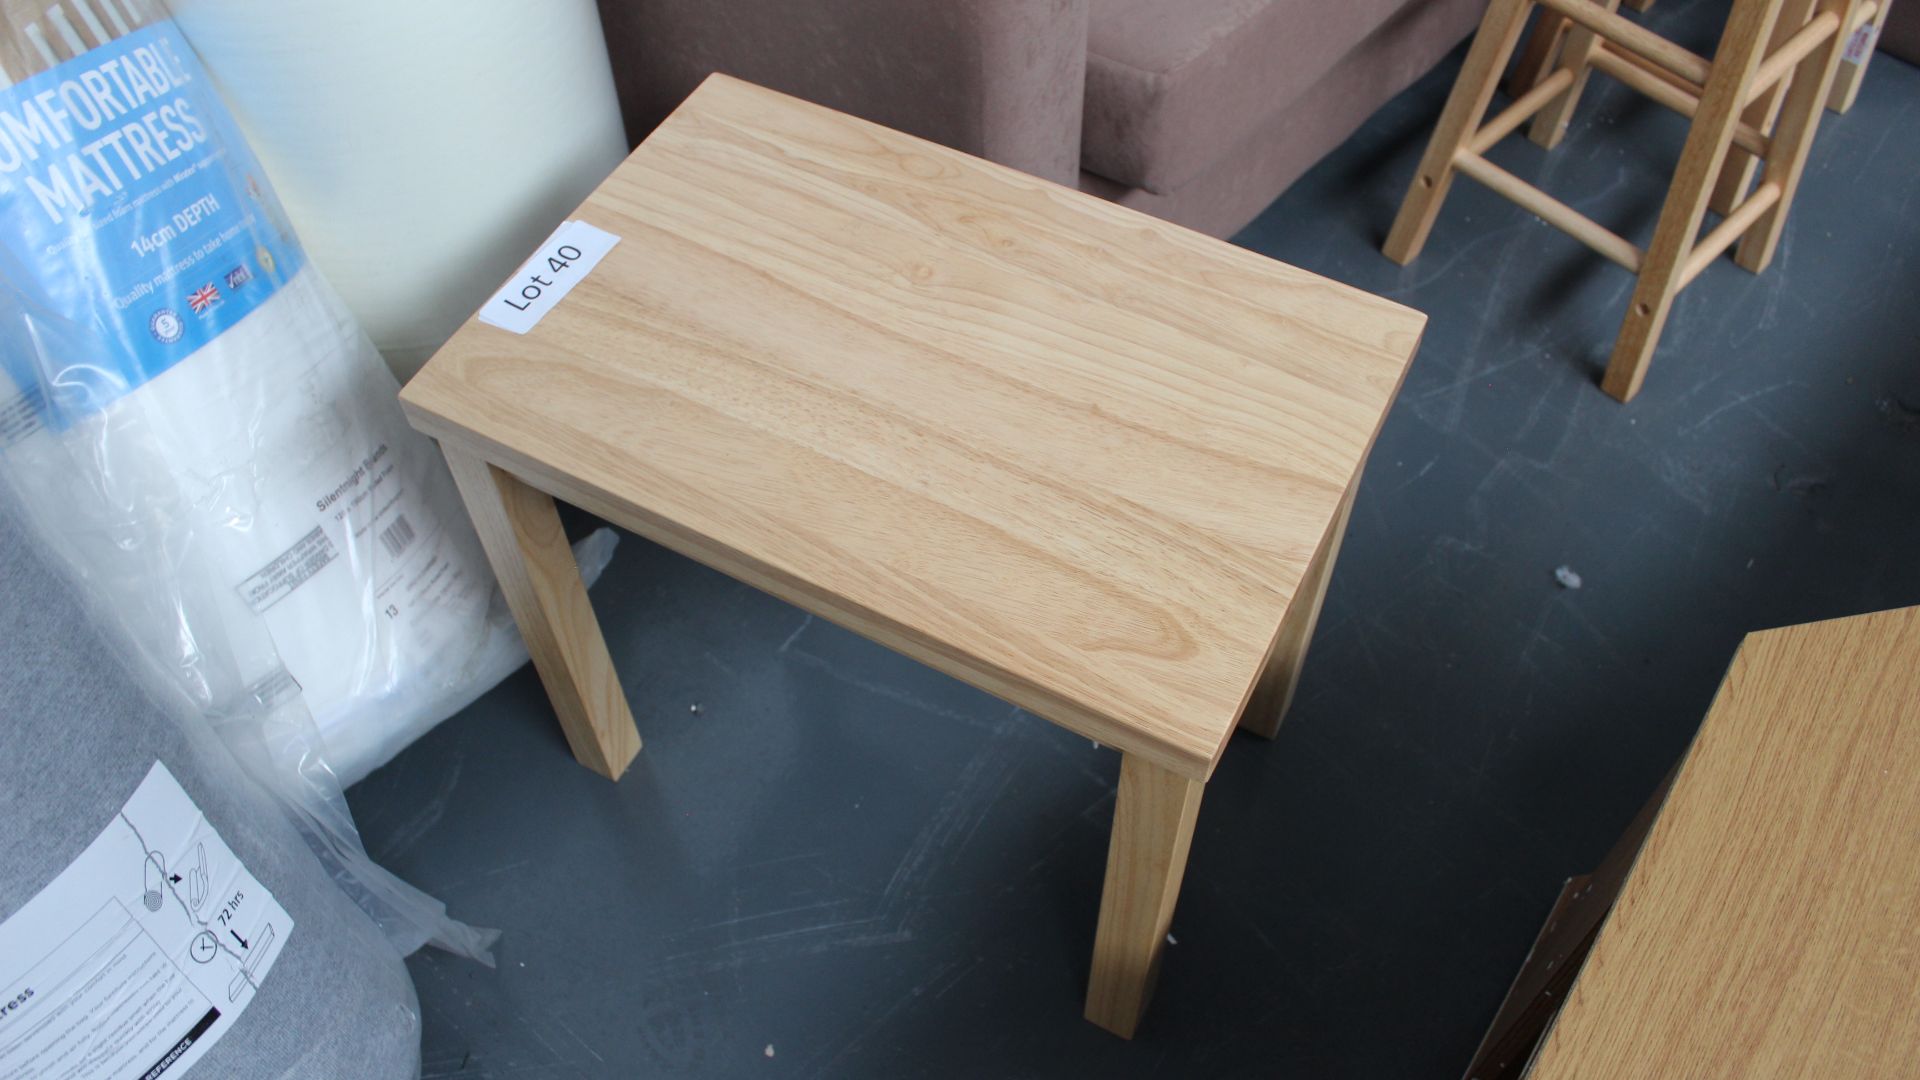 Wooden Table. Customer Returns